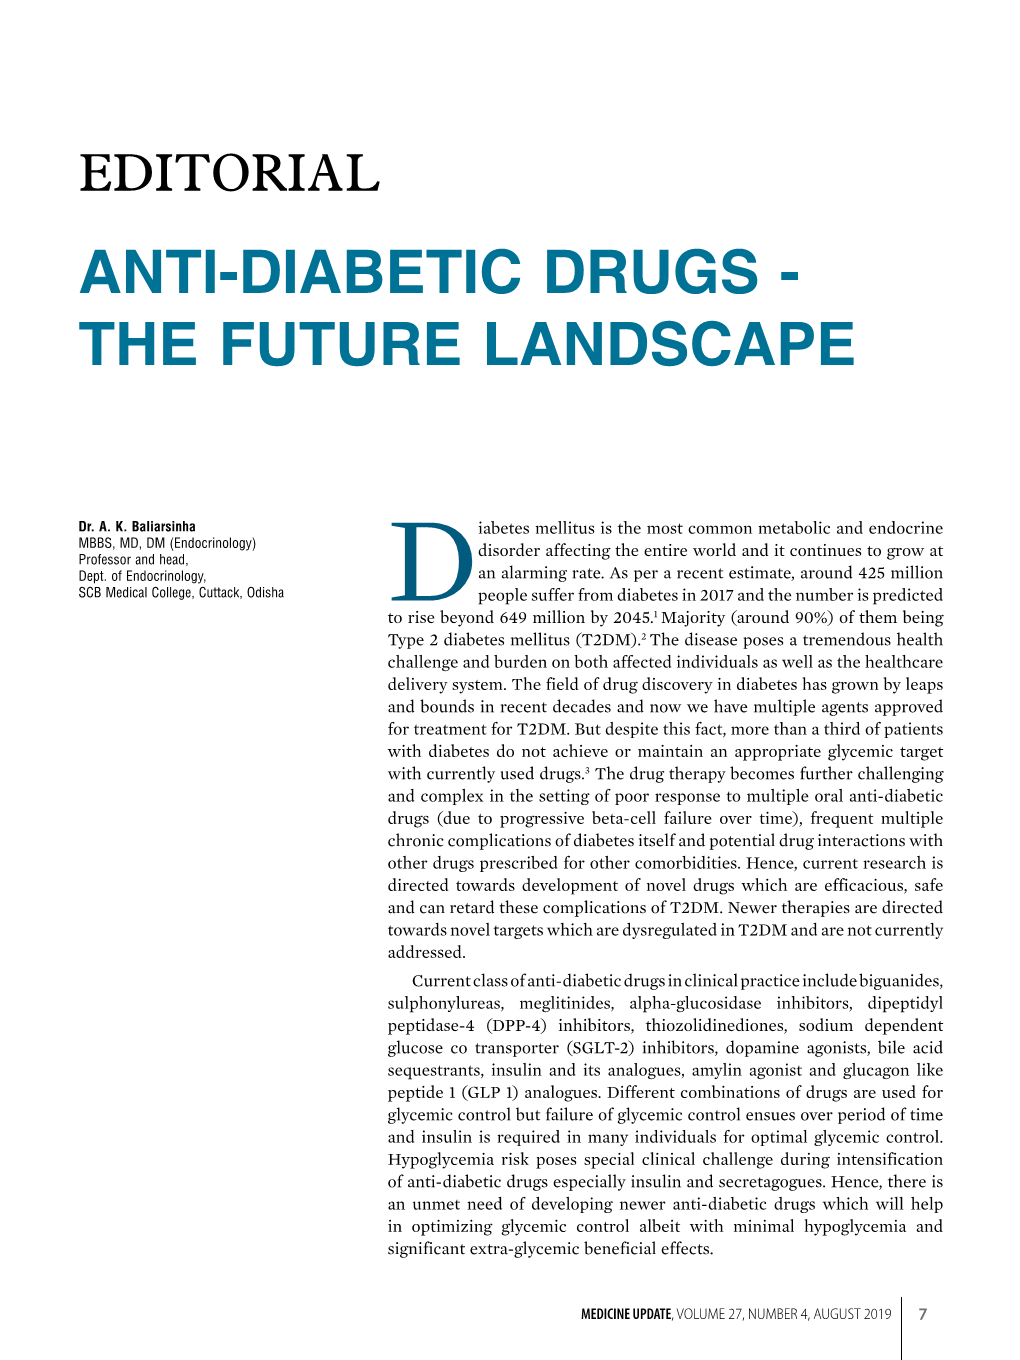 Anti-Diabetic Drugs - the Future Landscape